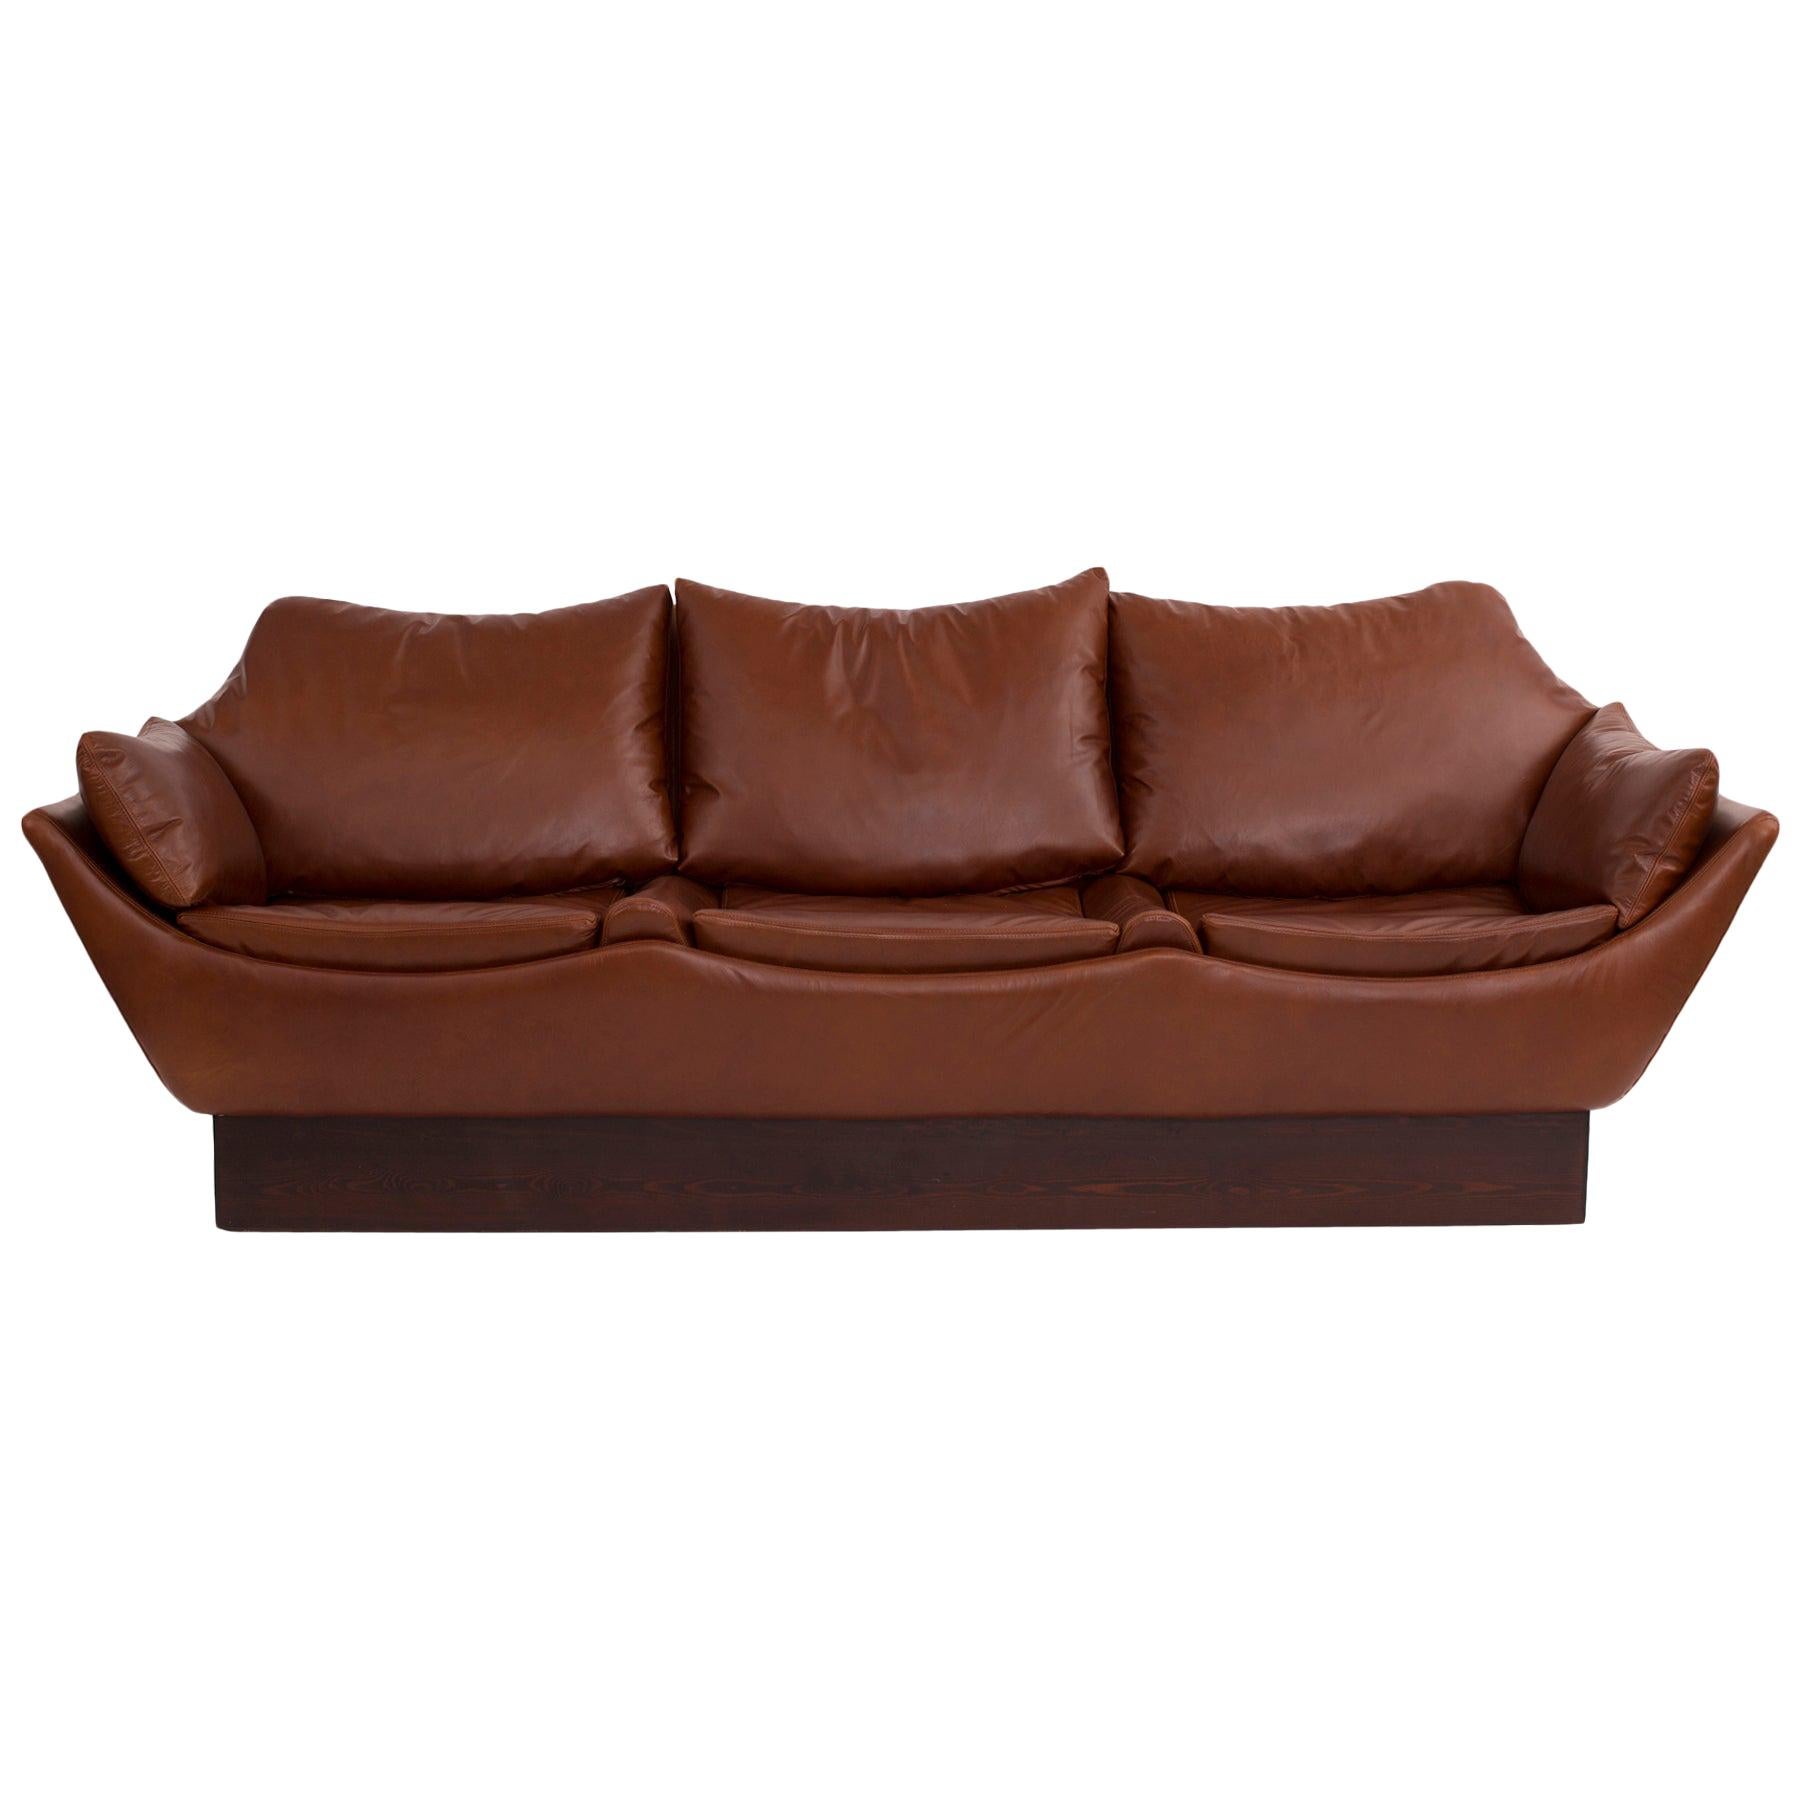 Phenomenal Danish Leather Sofa